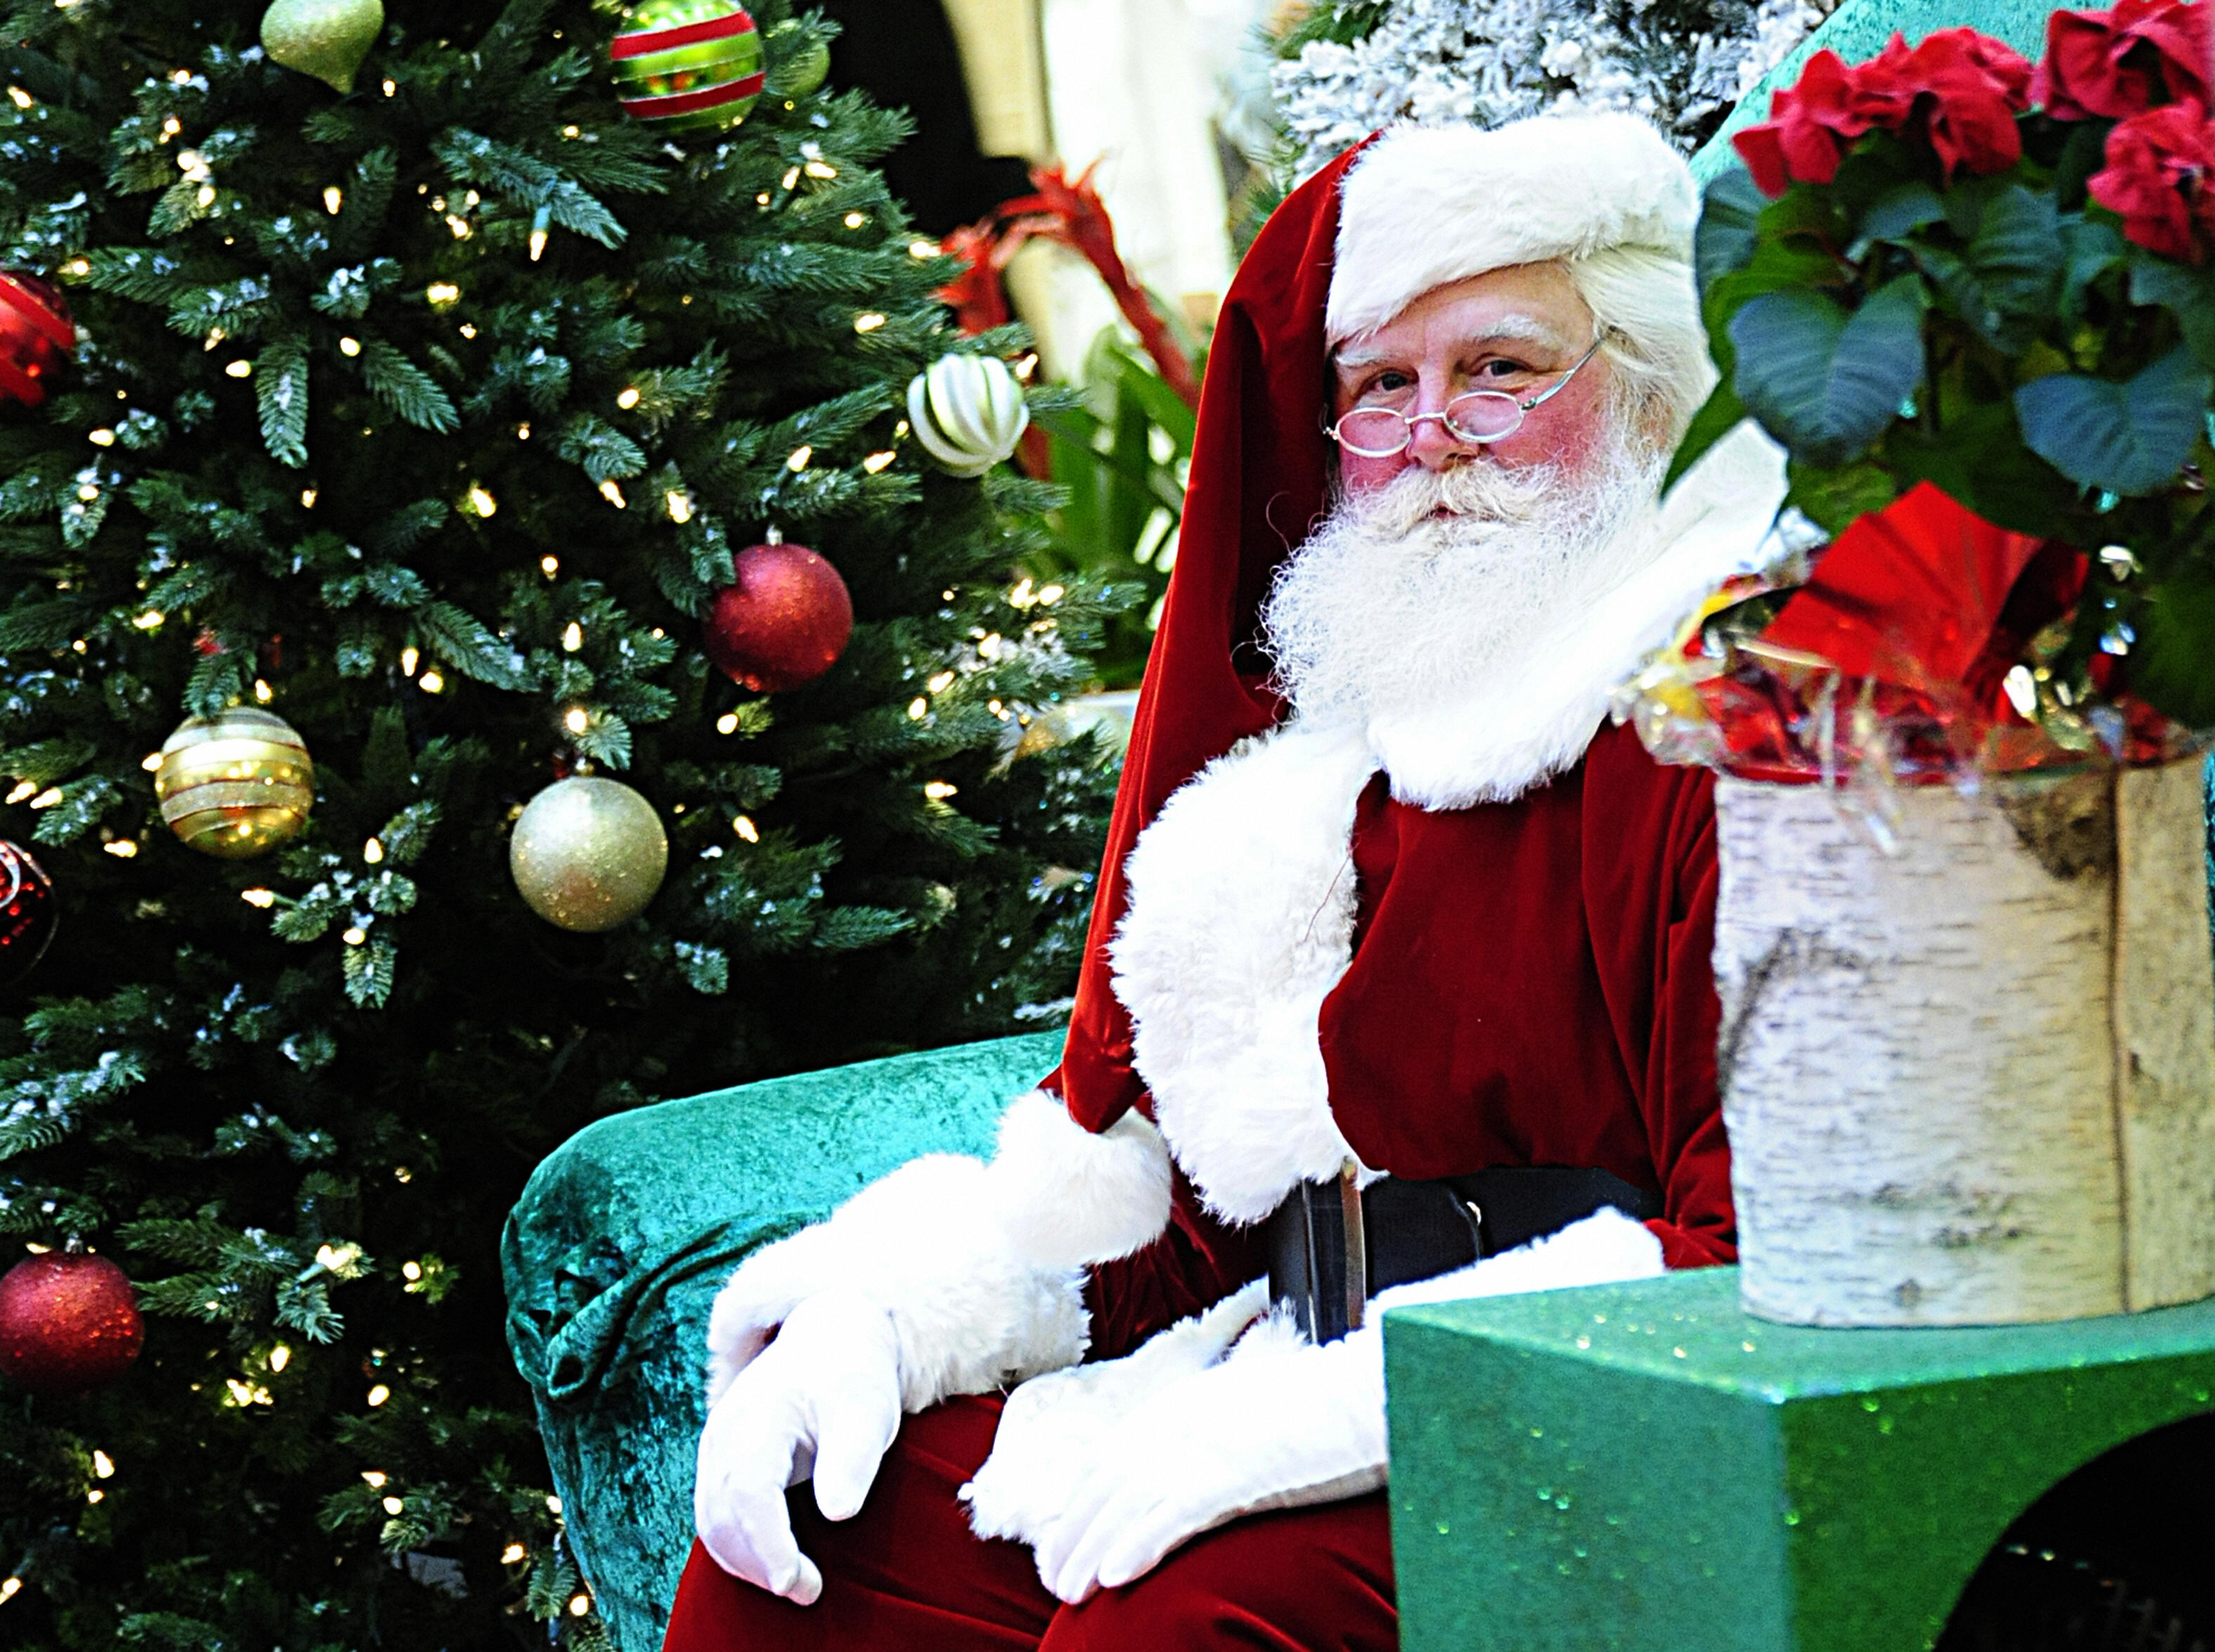 Santa Claus waits to greet children at the Tysons Corner mall in Tysons Corner, Virginia, on Dec. 20, 2008. (Karen Bleier—AFP/Getty Images)